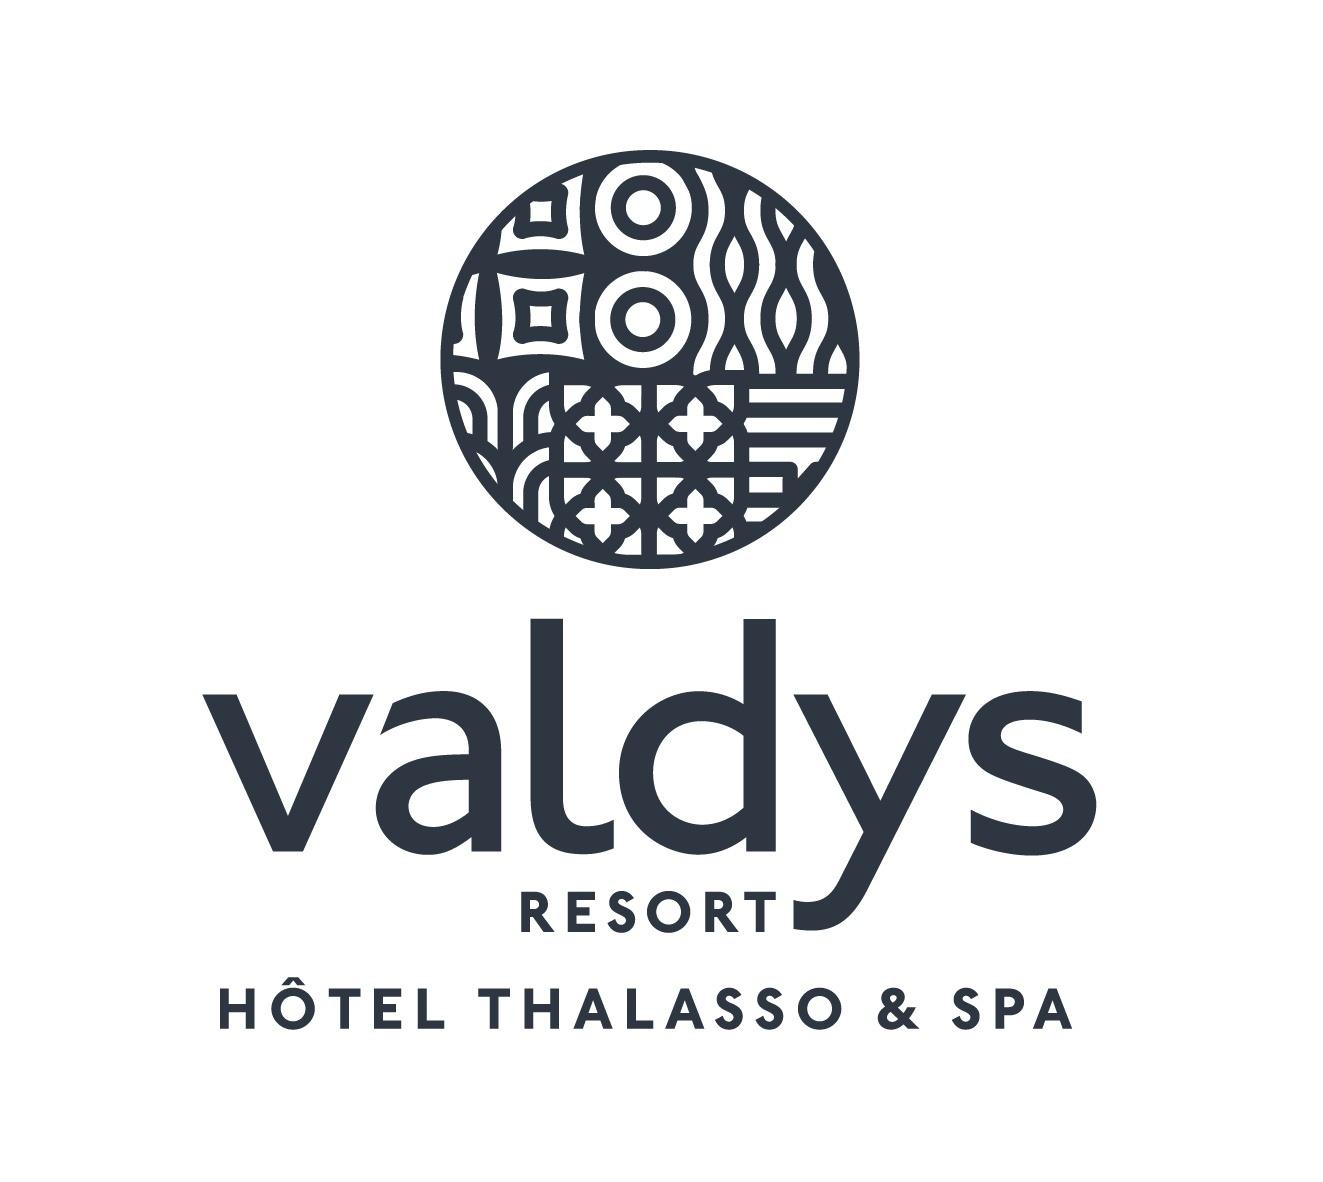 Valdys Resort Roscoff - Hôtel, Thalasso & Spa Roscoff